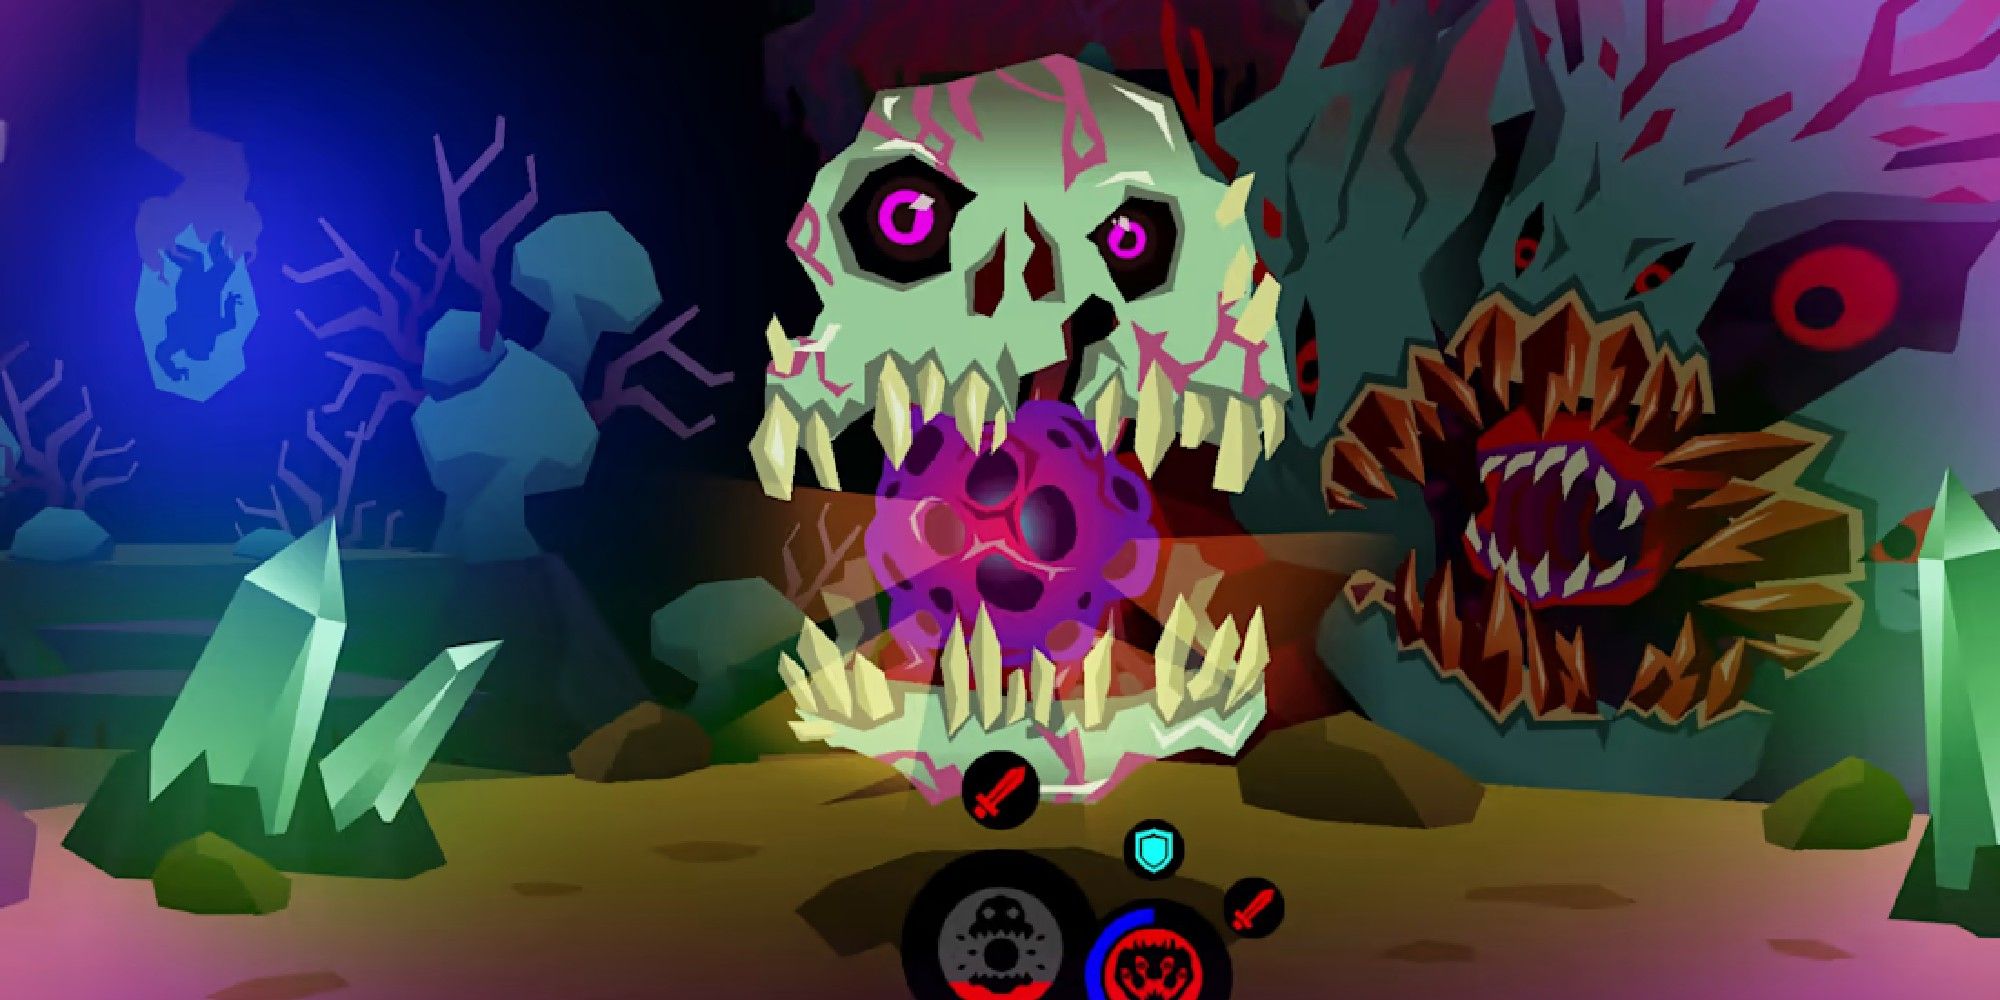 Reanimated skull holding a purple orb between its teeth.